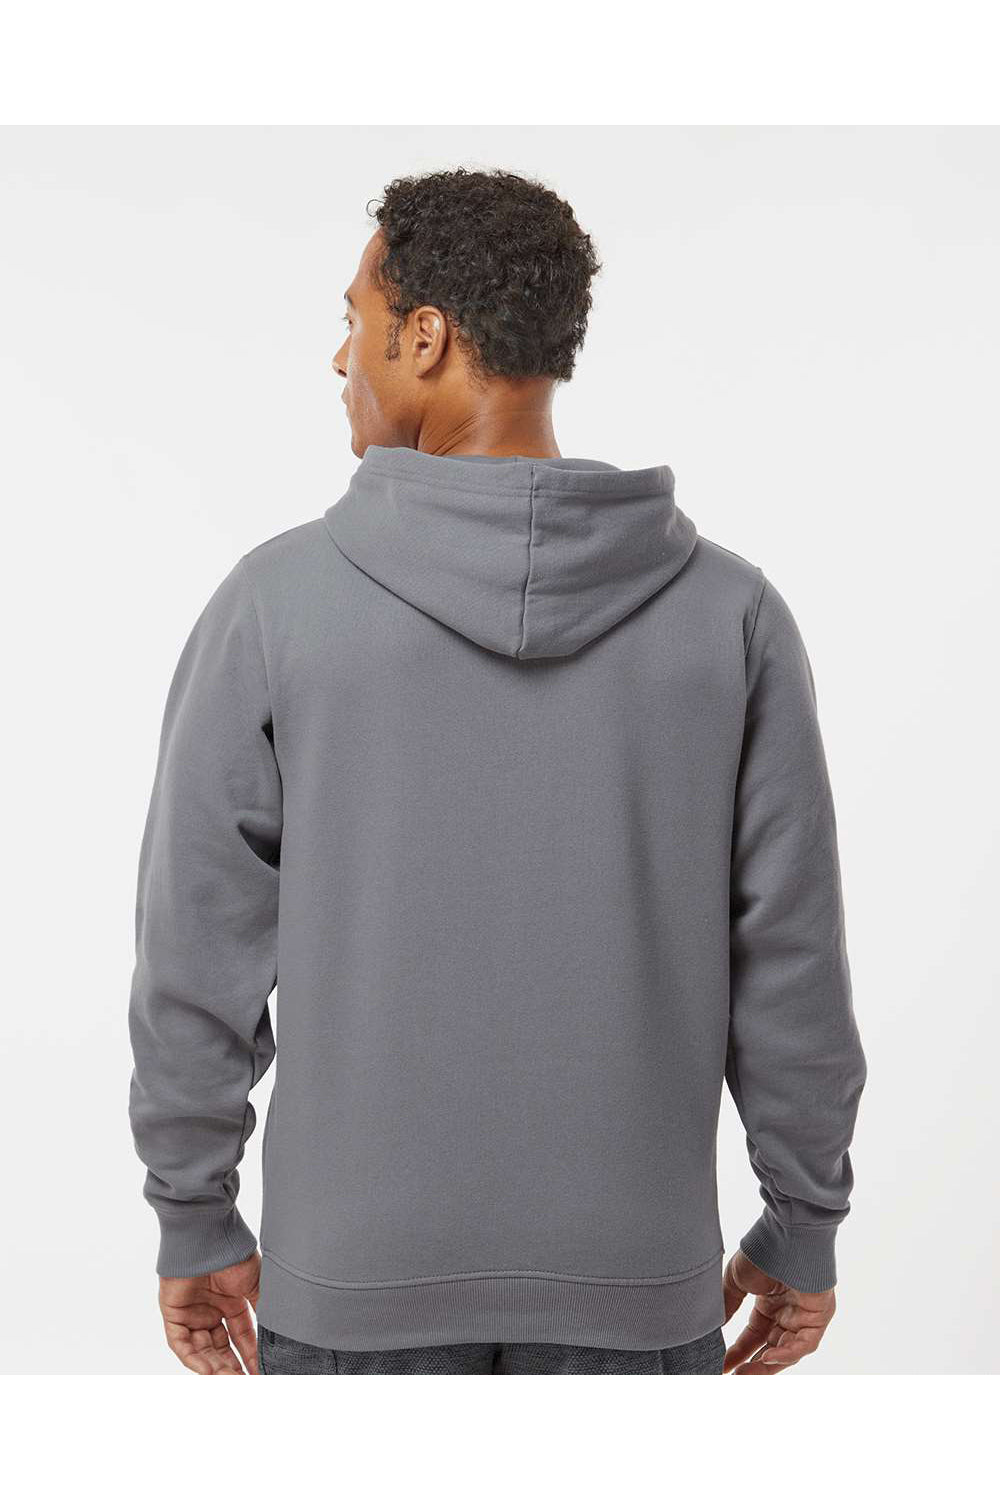 Augusta Sportswear 5414 Mens Fleece Hooded Sweatshirt Hoodie Graphite Grey Model Back